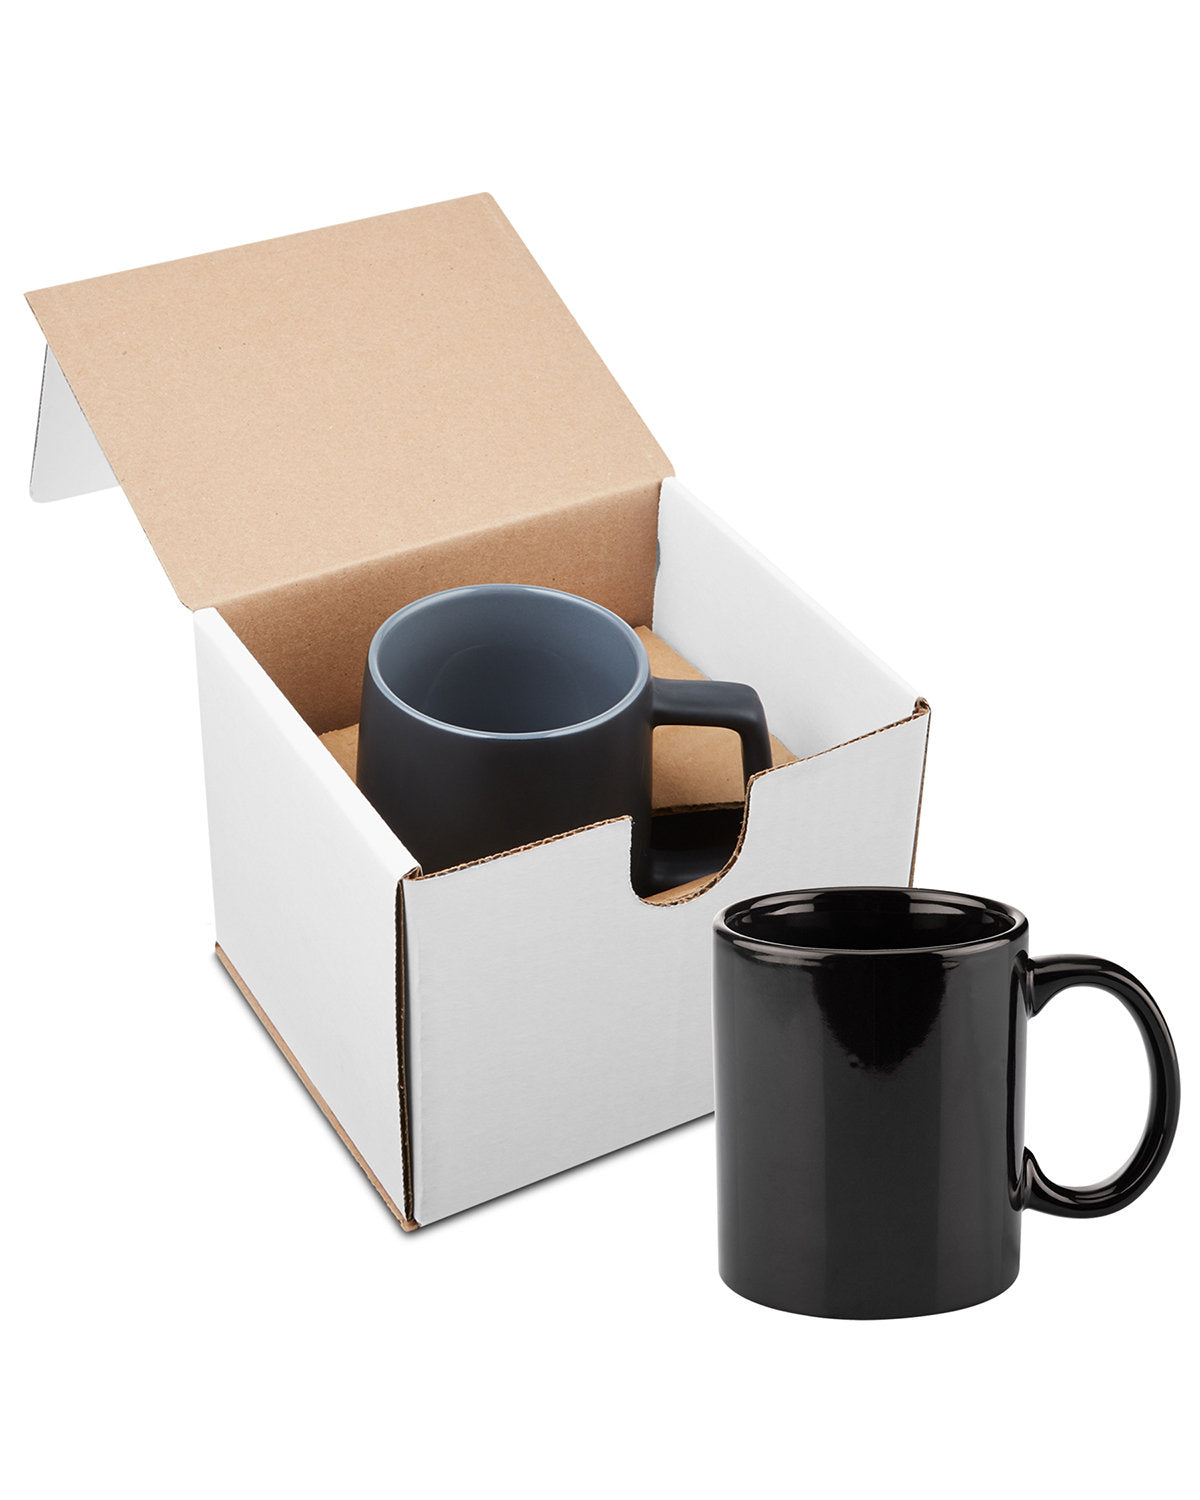 # 11oz Basic C Handle Ceramic Mug In Mailer